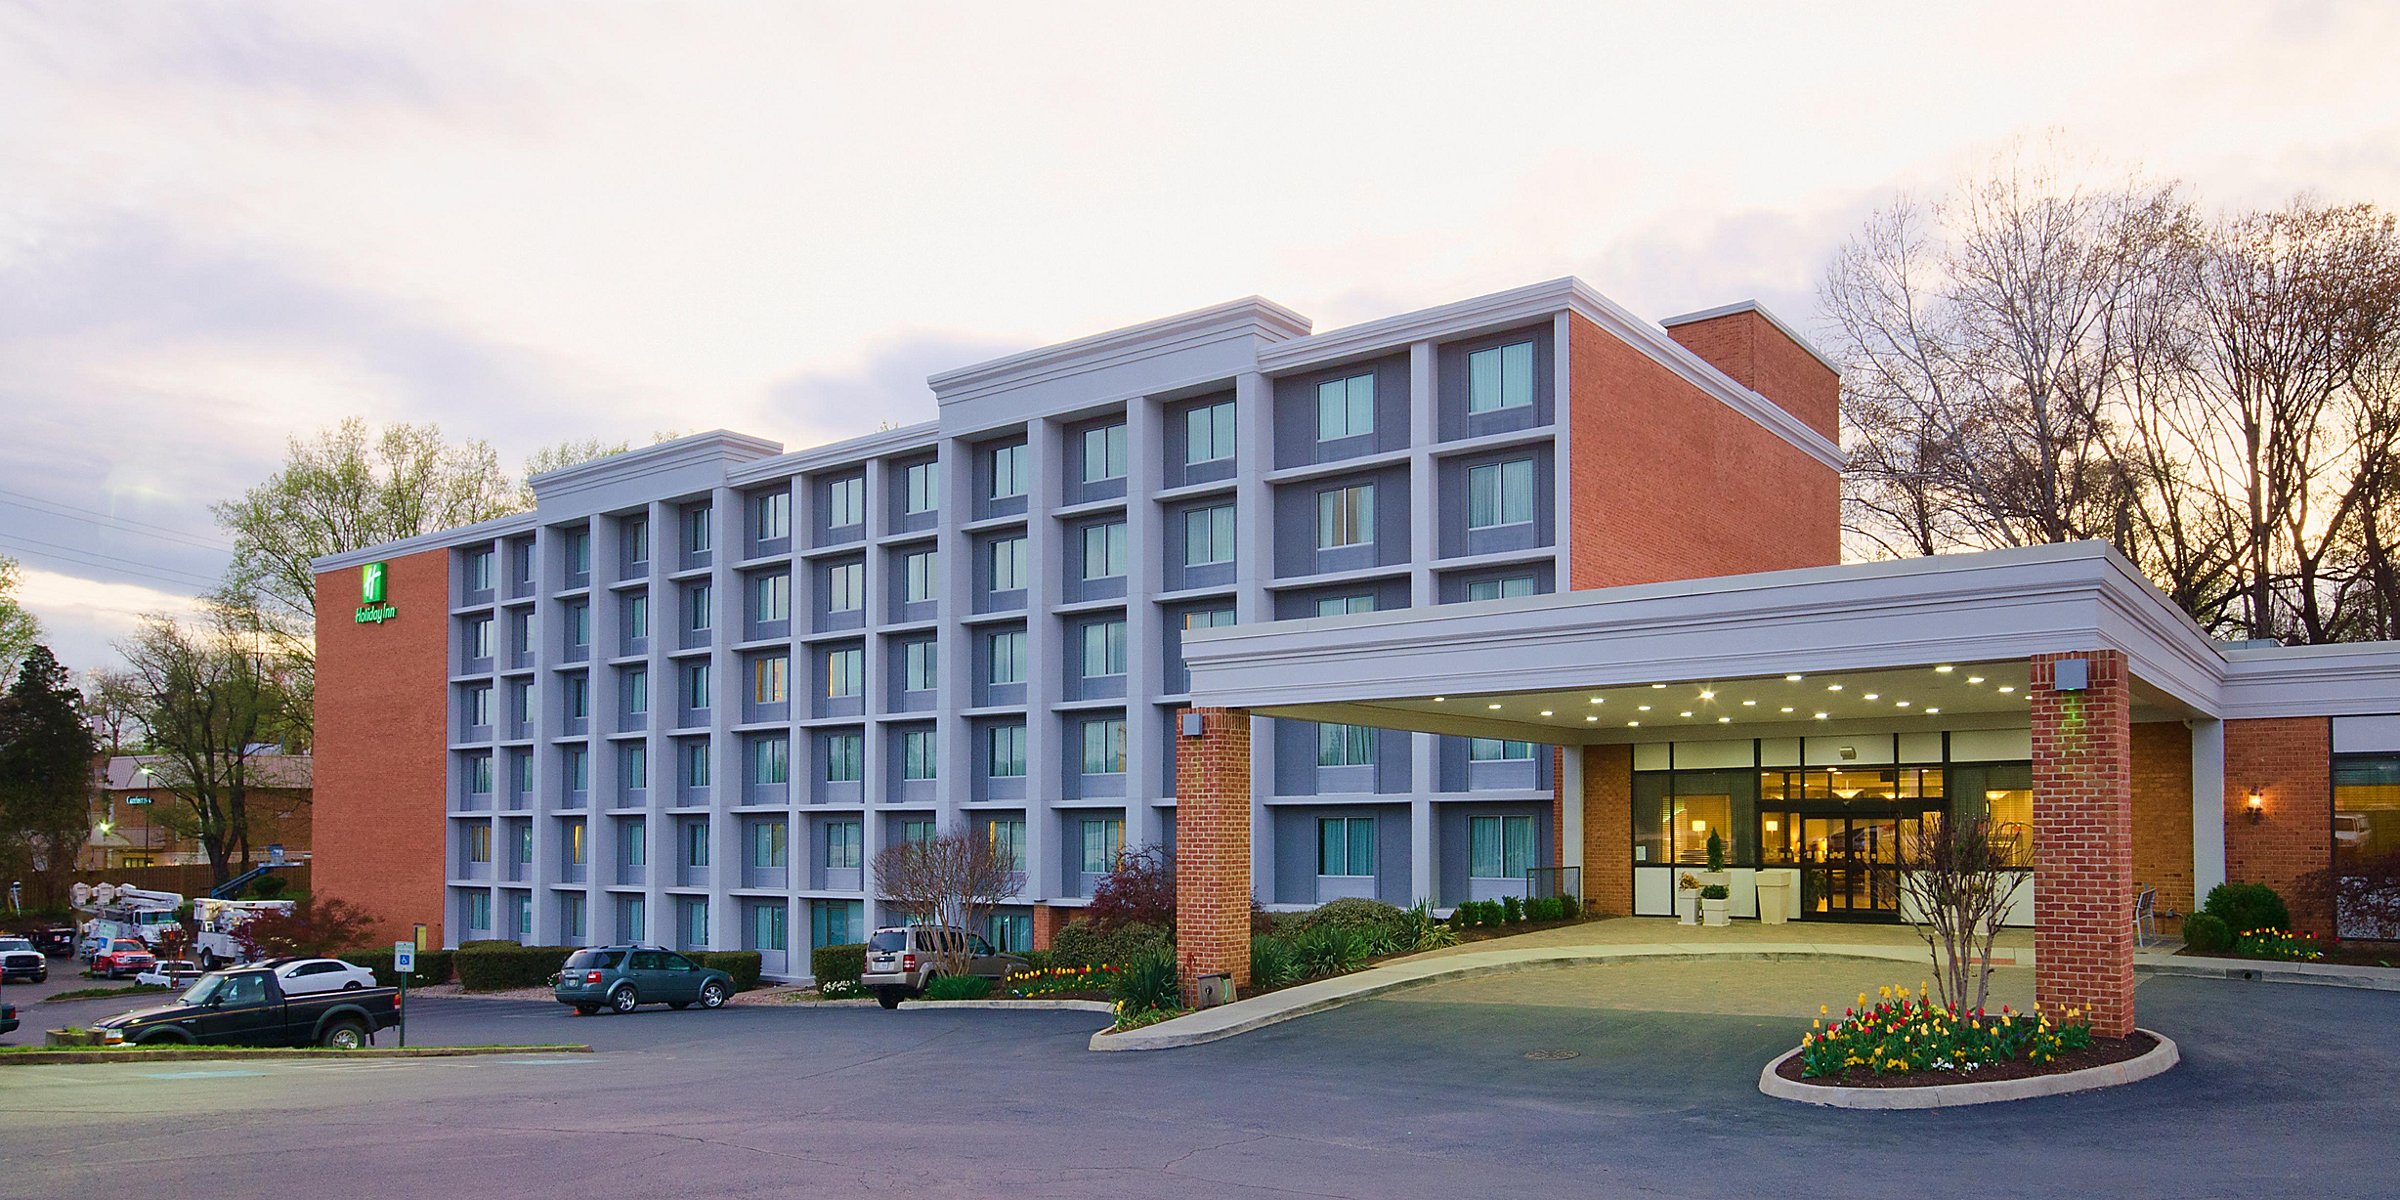 Shamin Hotels Buys Into Charlottesville